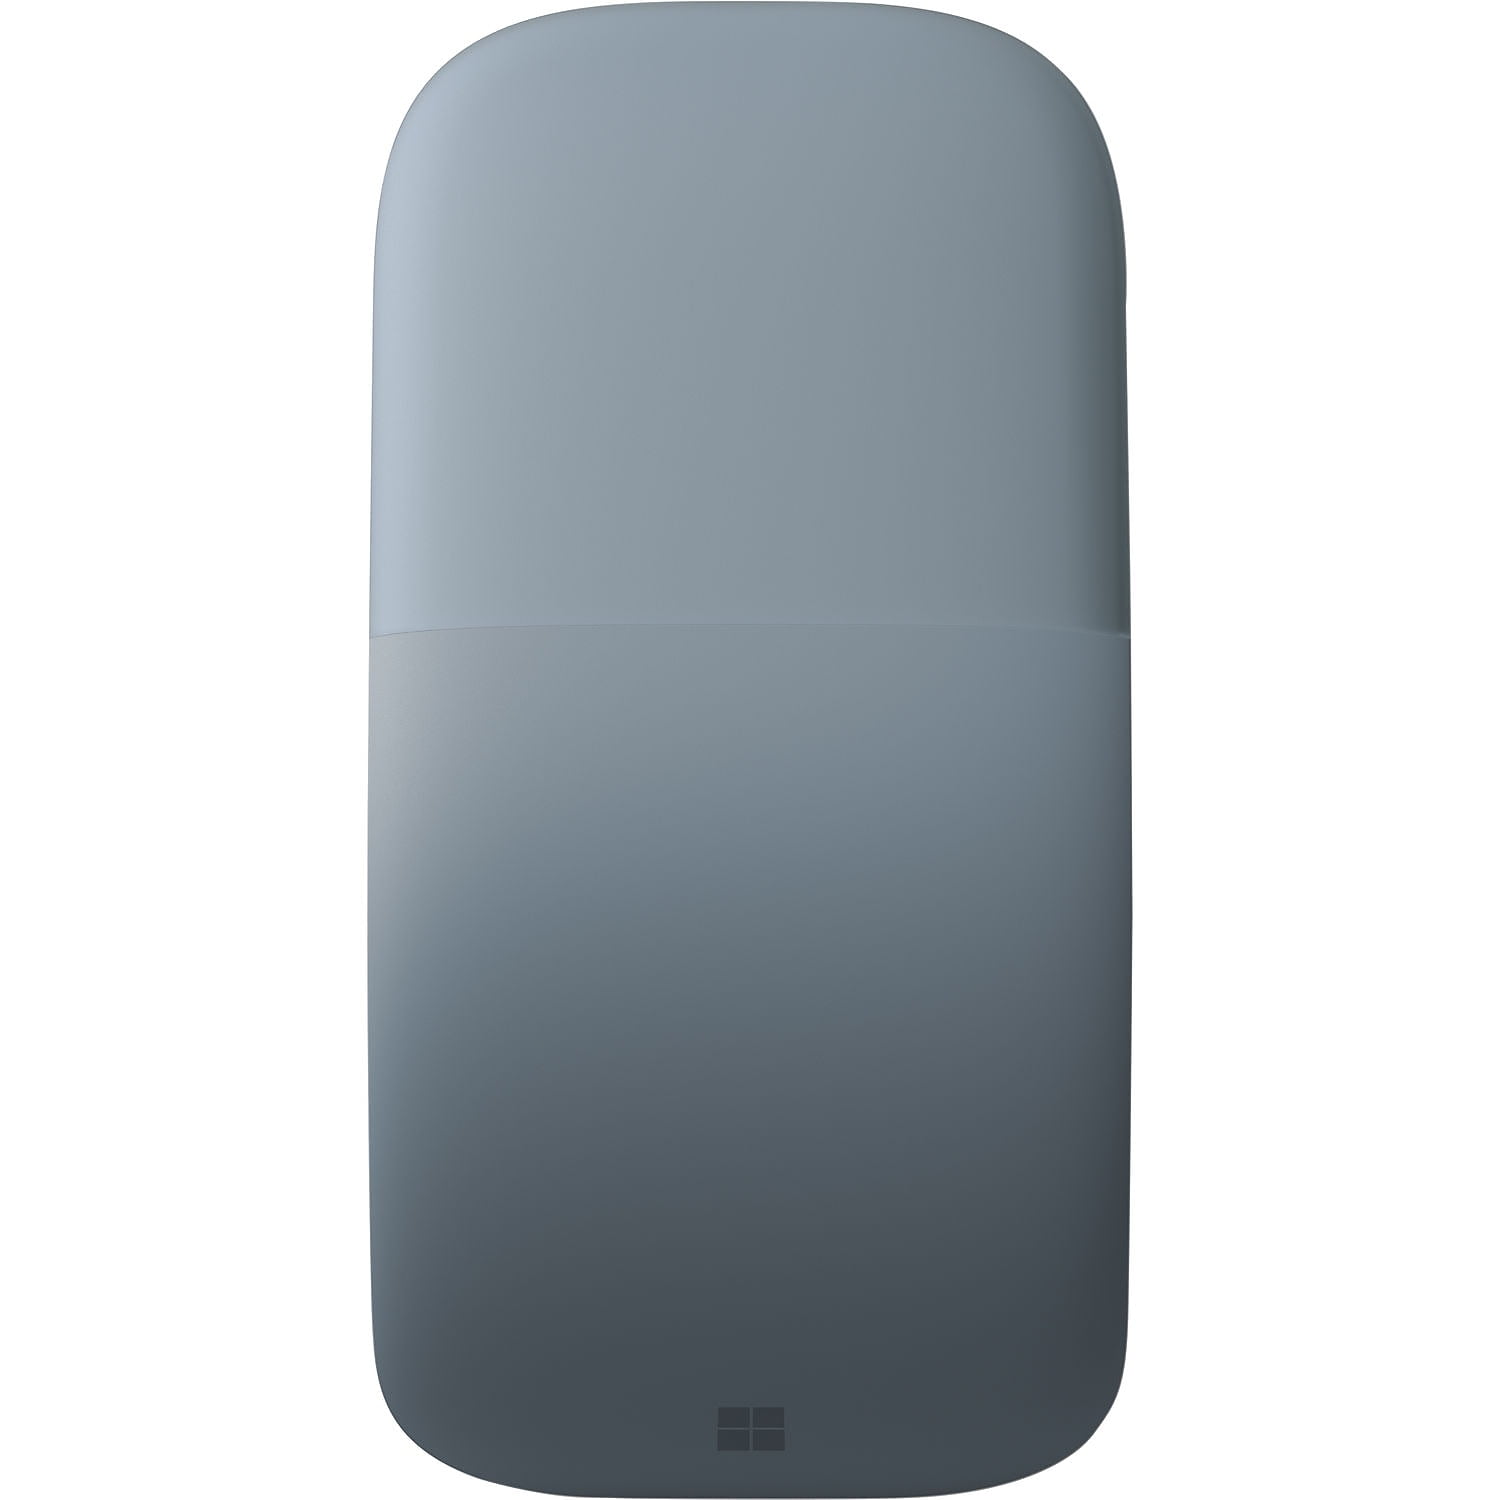 Microsoft Arc Mouse, Surface CZV-00065 Blue, Ice